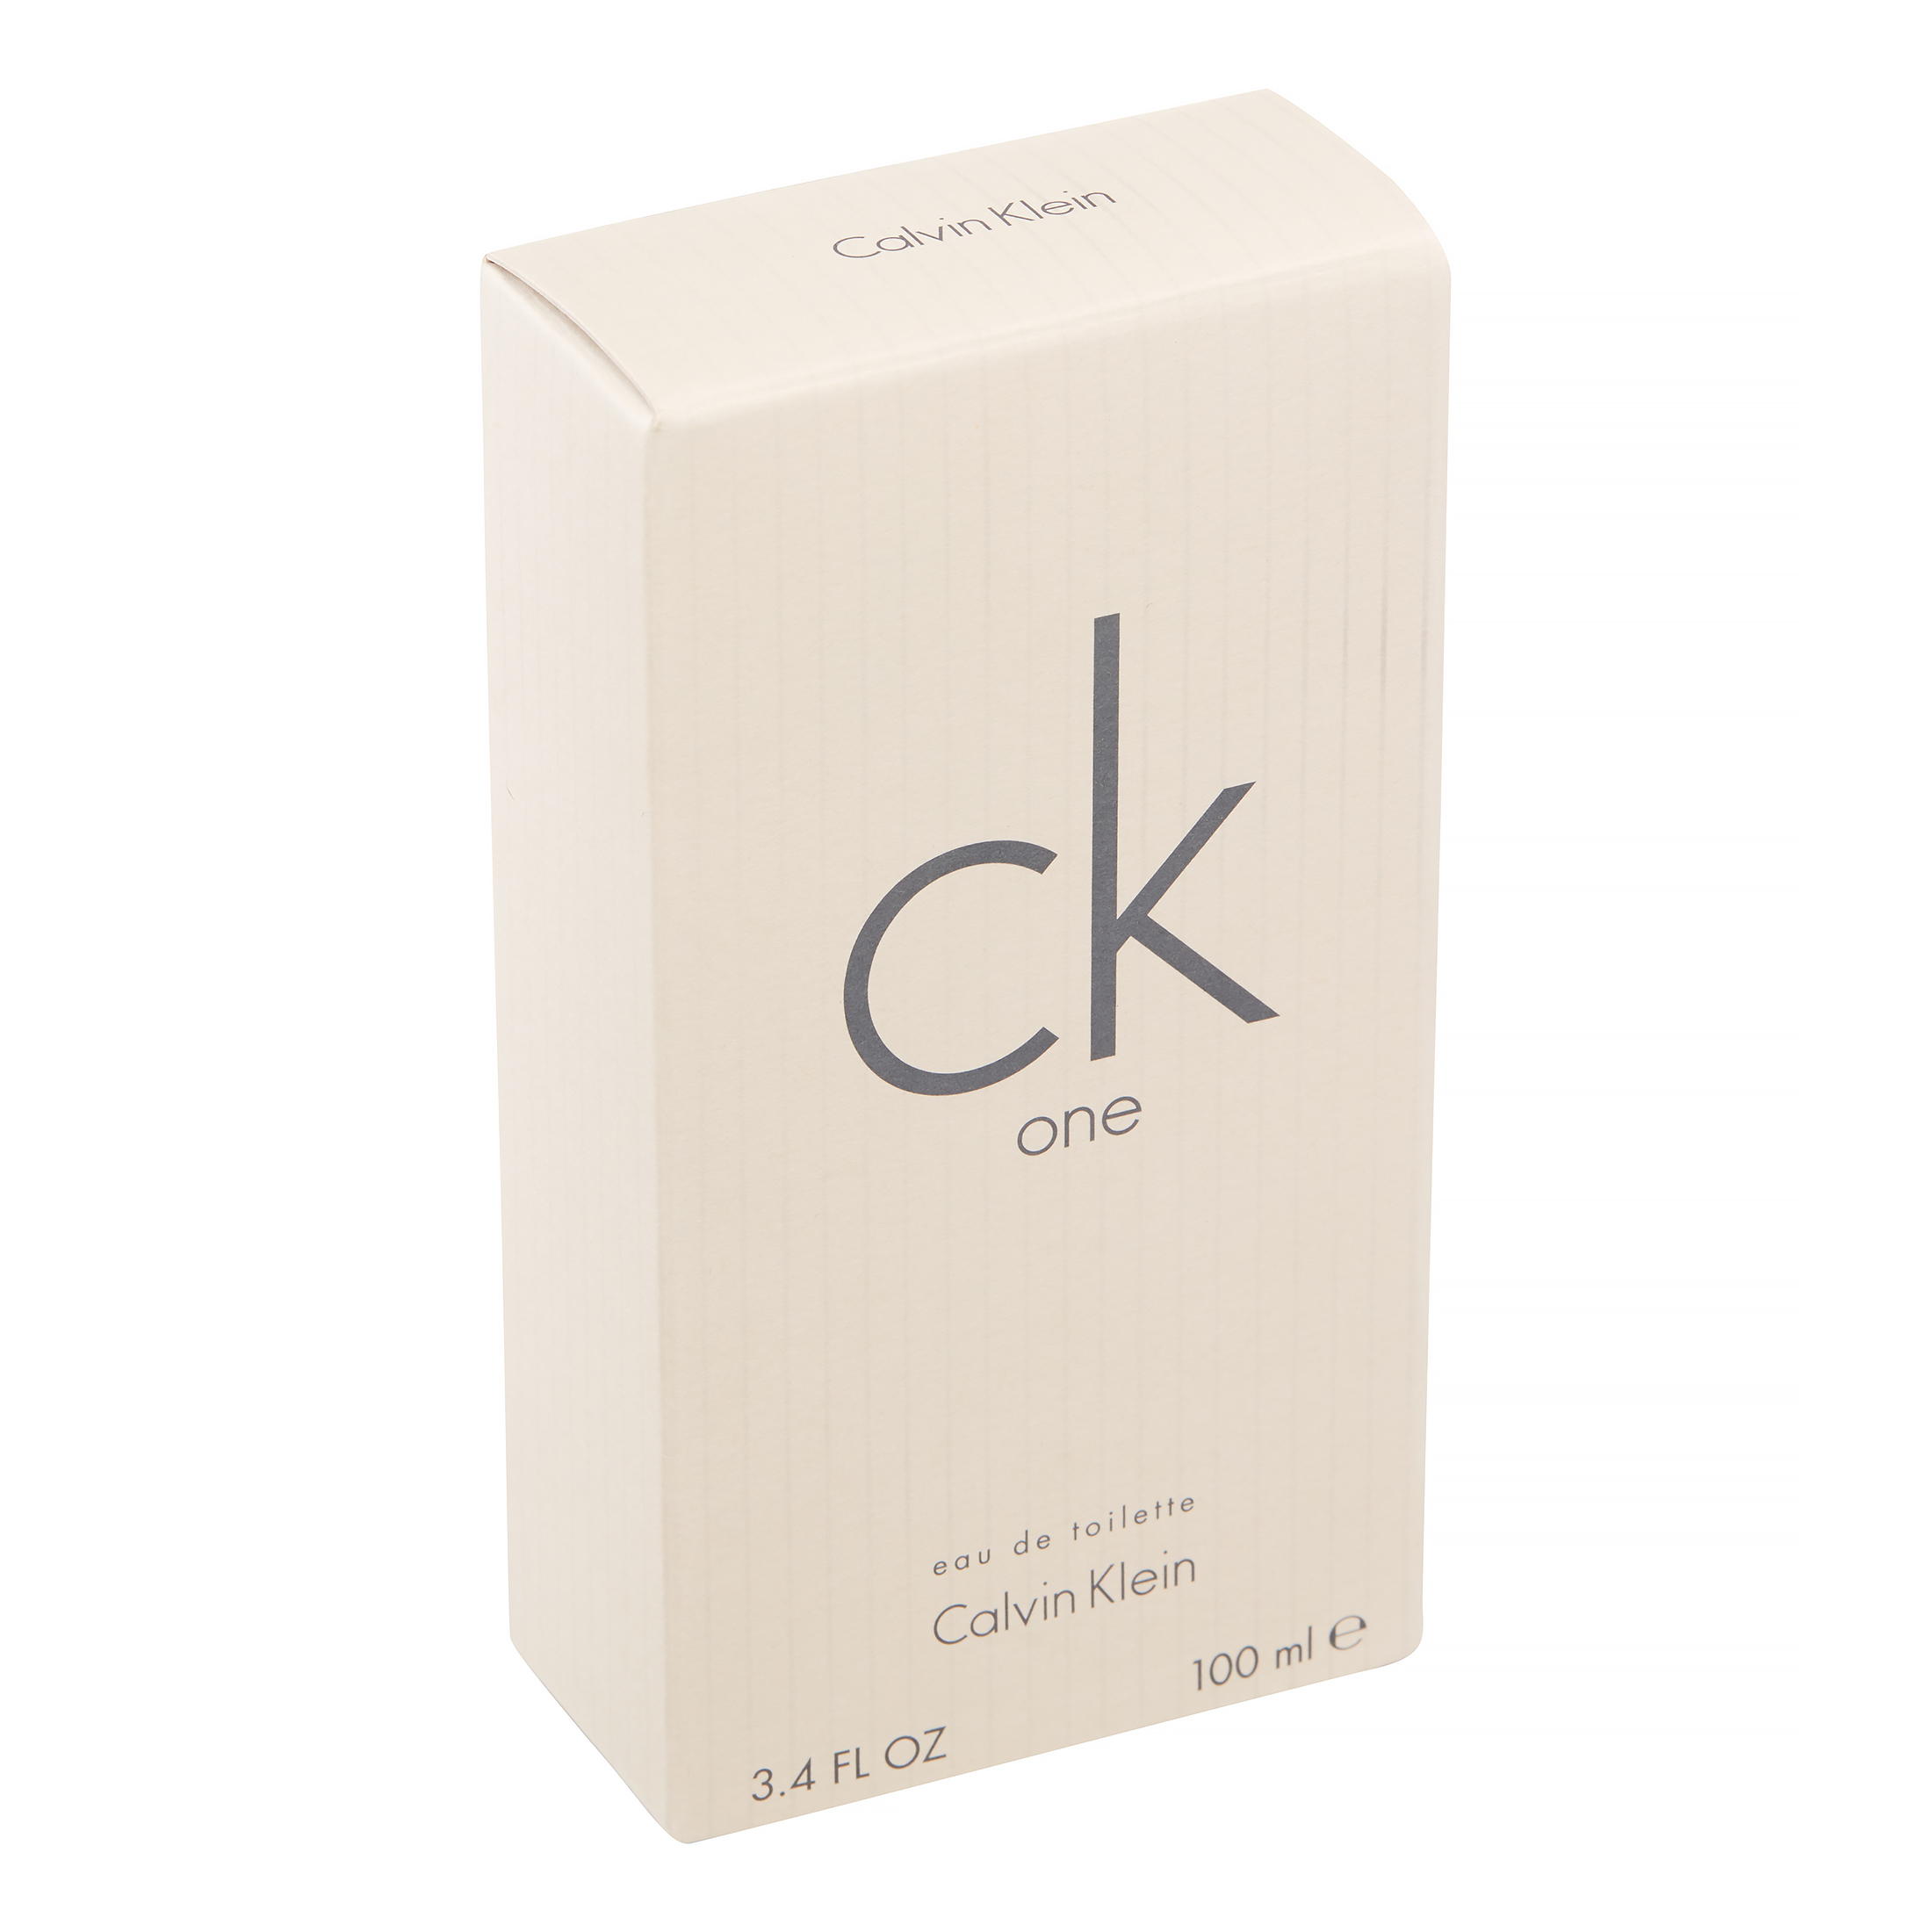 Calvin Klein Ck One Eau De Toilette Spray, Unisex Perfume, 3.4 Oz - image 2 of 8